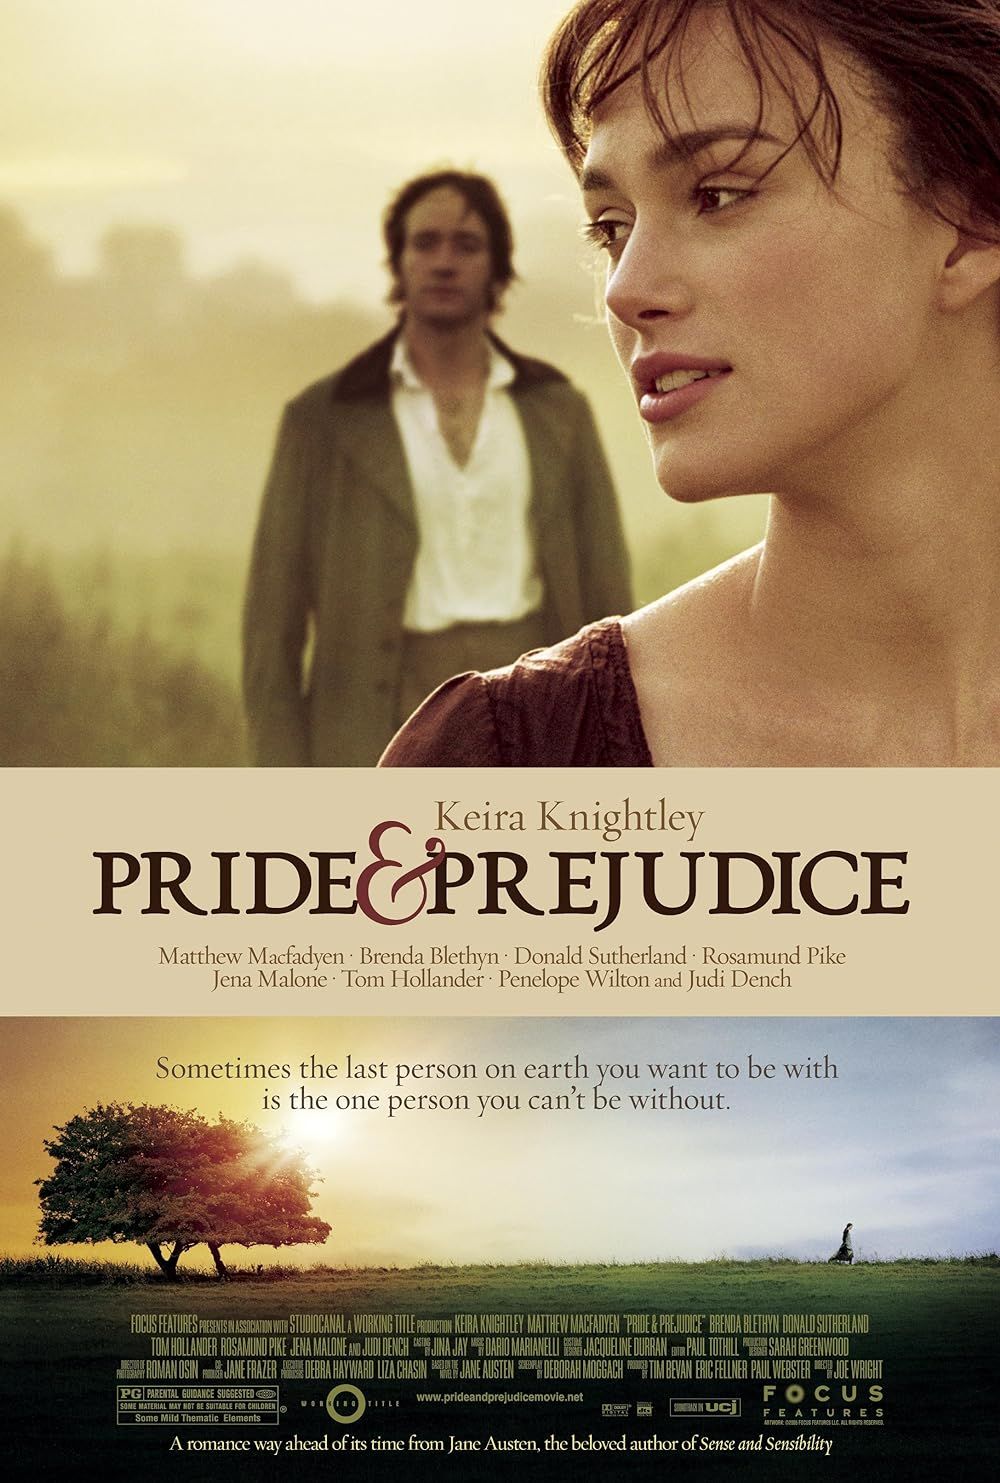 Keira Knightley and Matthew Mcfayden in Pride and Prejudice 2005